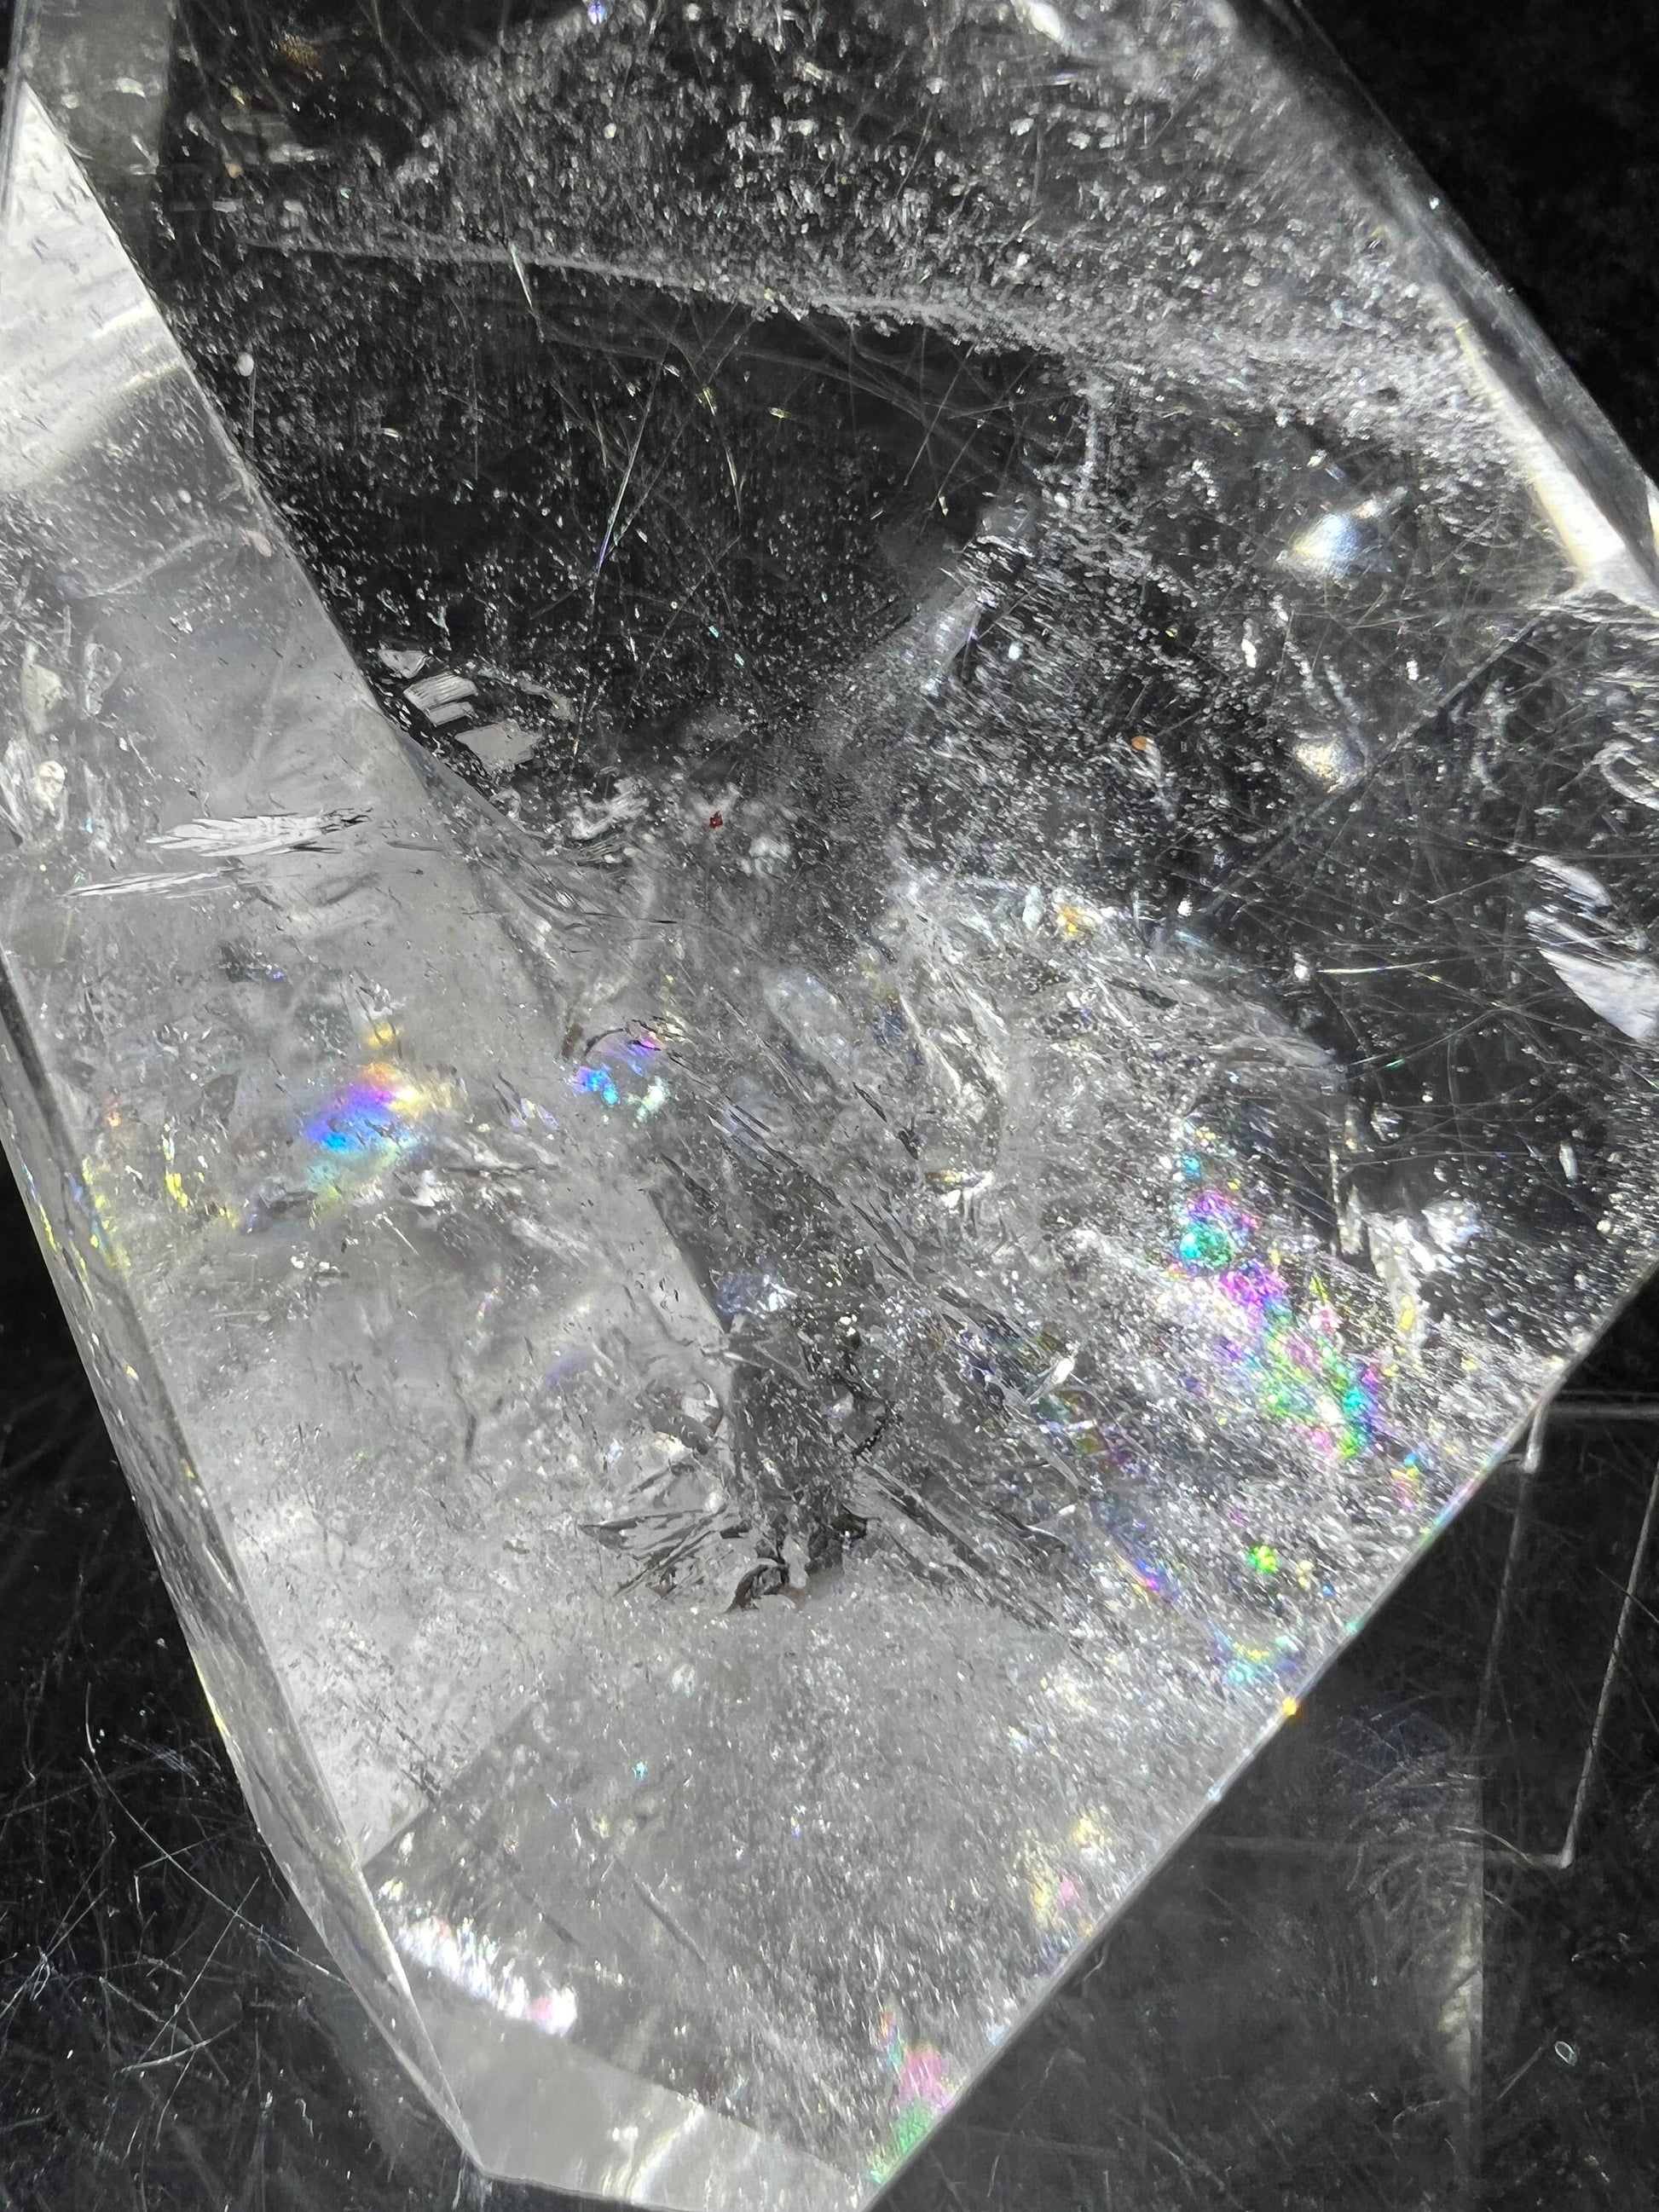 Amazing Clear Quartz Filled With Rainbows! Very Unique Crystal. Polished Clear Quartz Freeform.